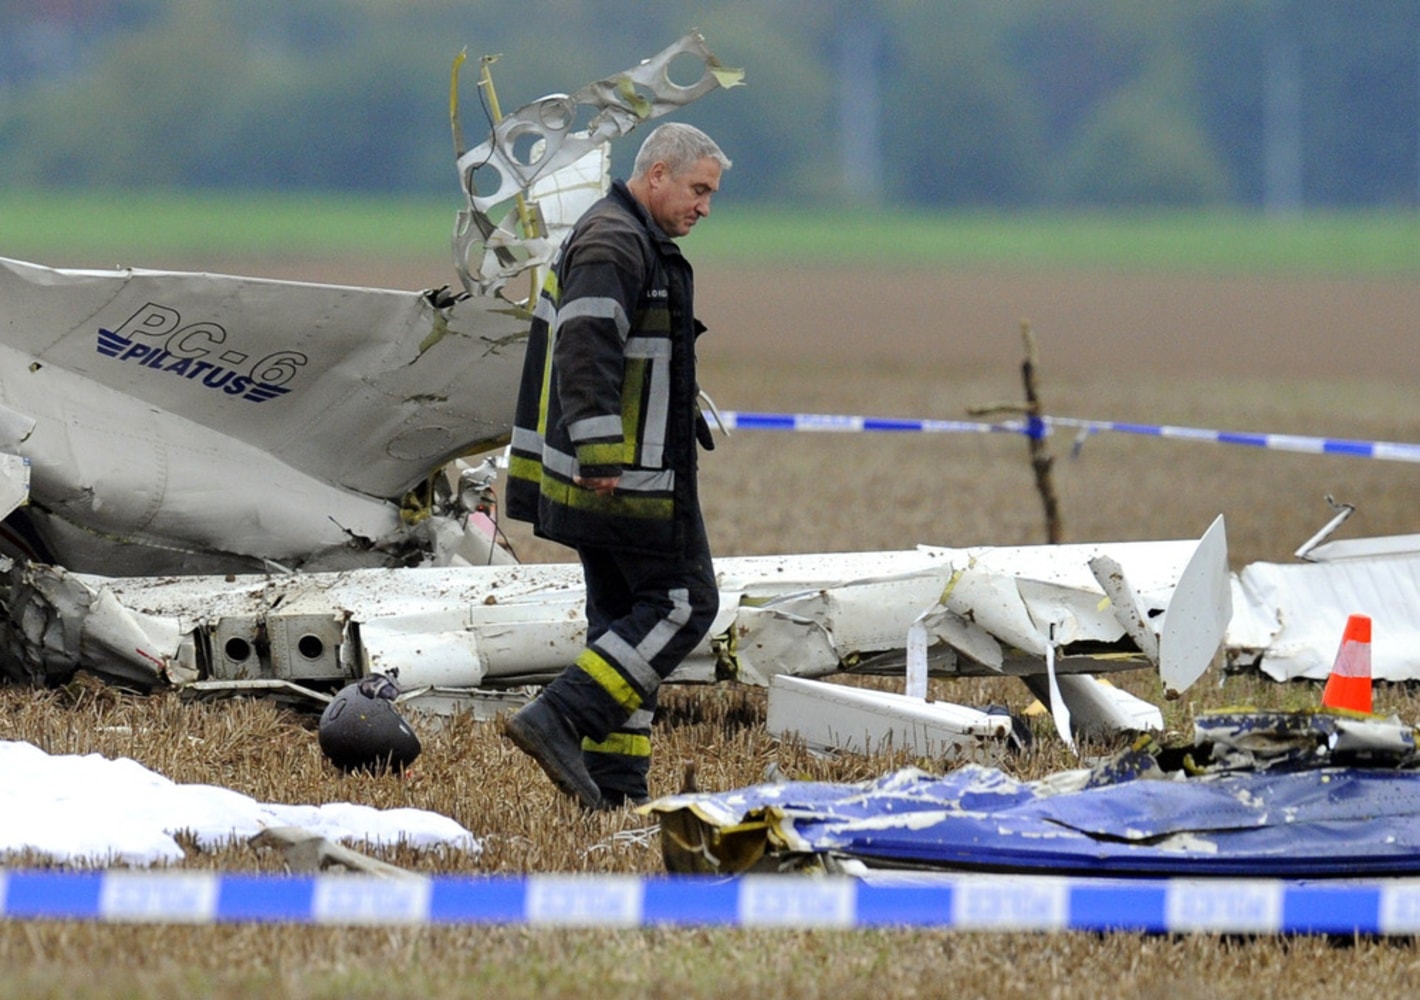 Skydivers' plane crashes in Belgium, 11 killed NBC News